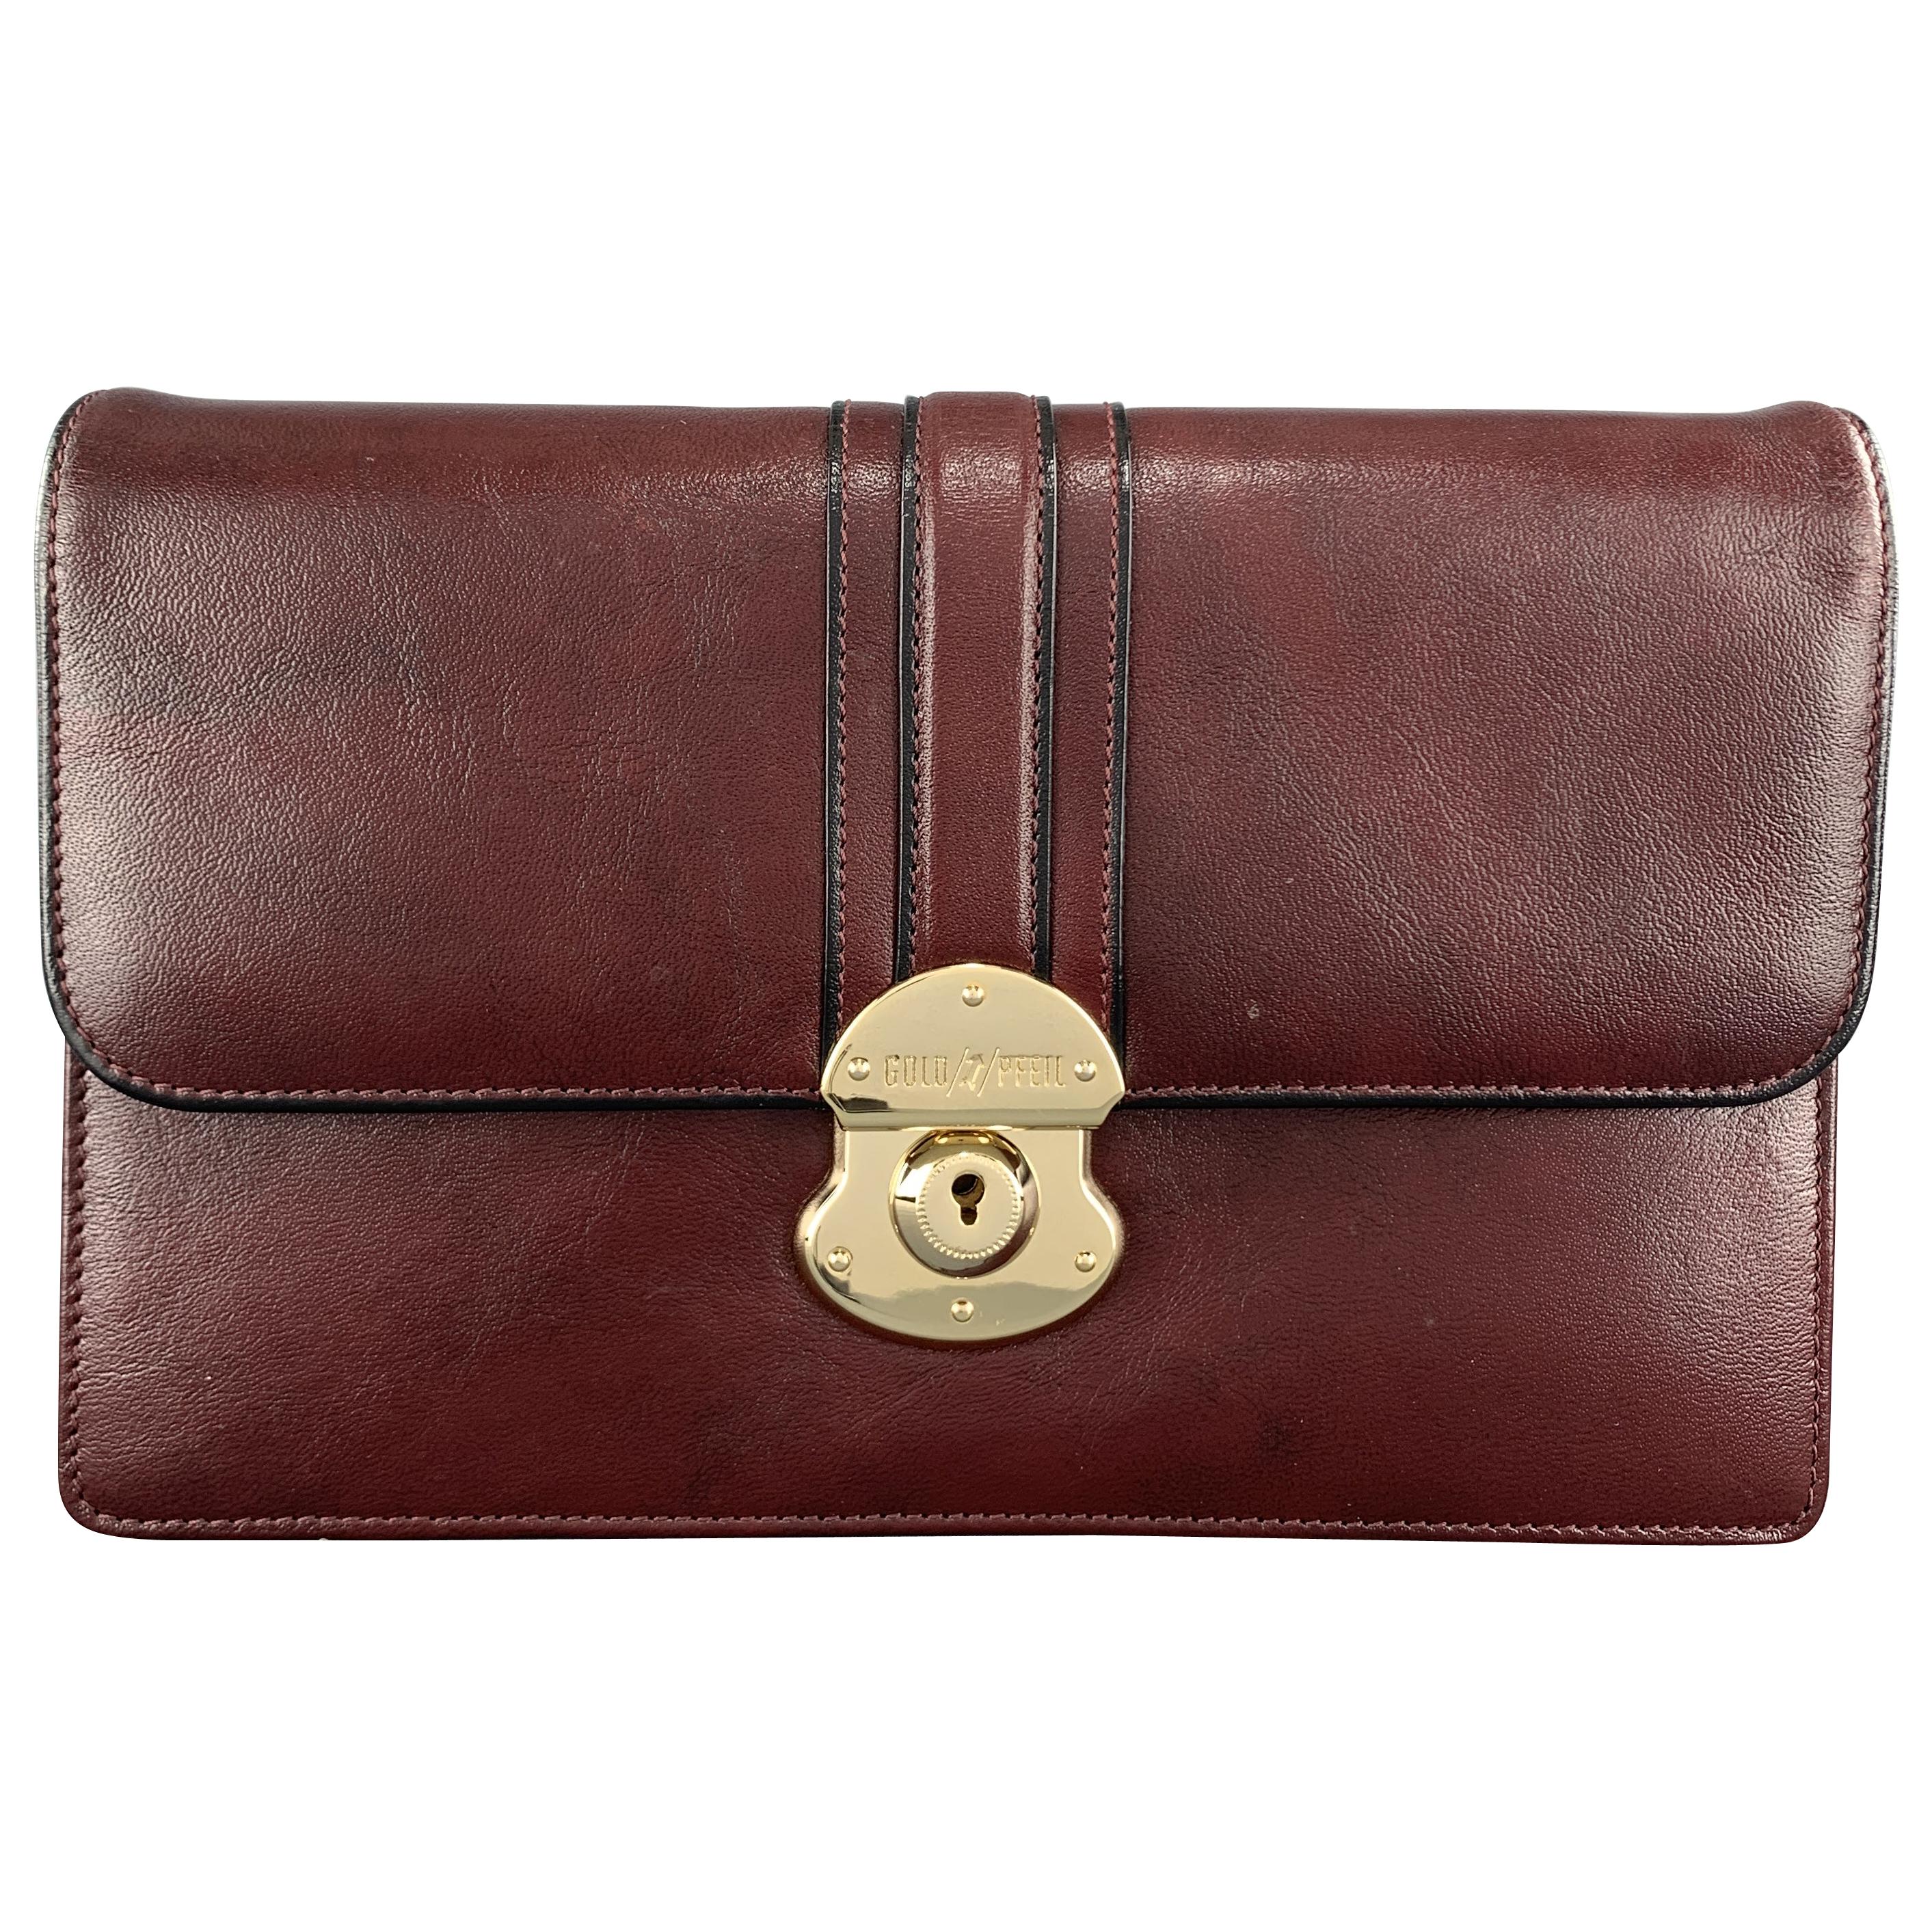 GOLDPFEIL Solid Burgundy Leather Mini Briefcase Clutch Bag